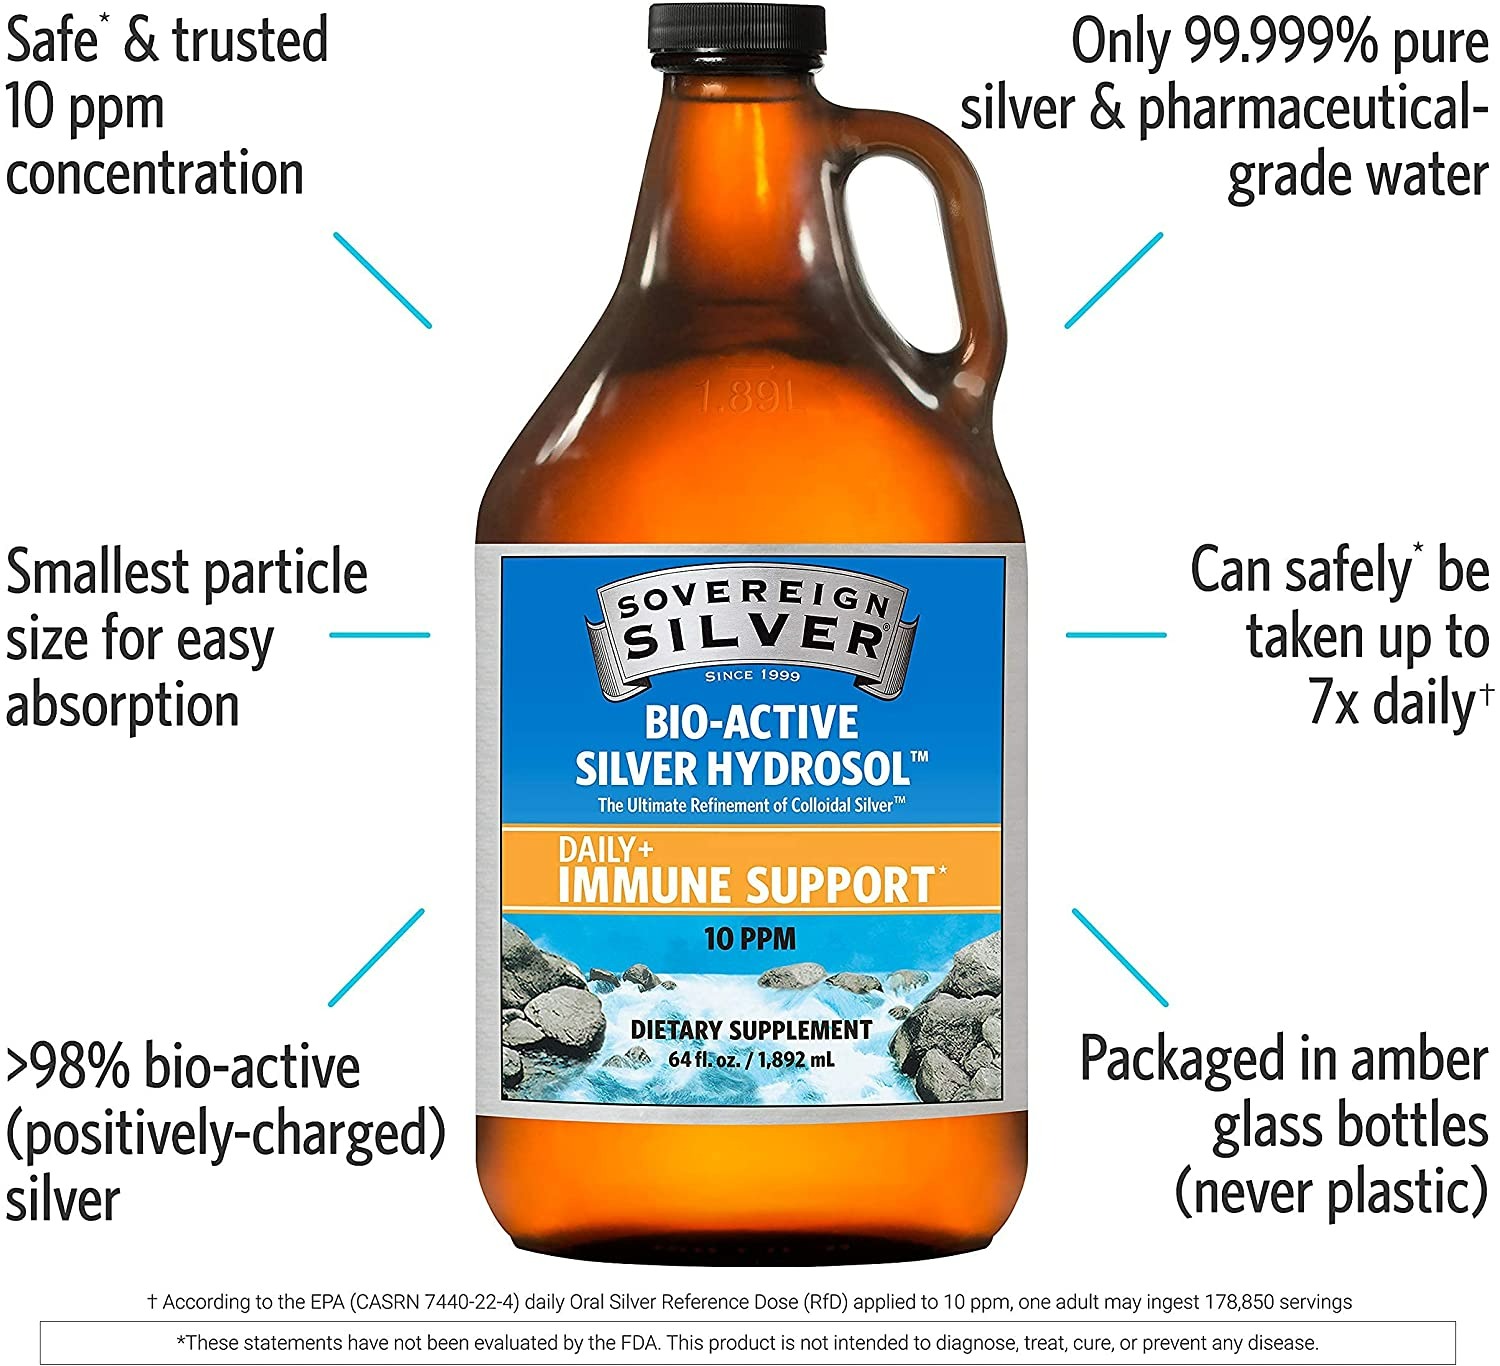 Sovereign Silver Bio-Active Silver Hydrosol - 1982 ml-1